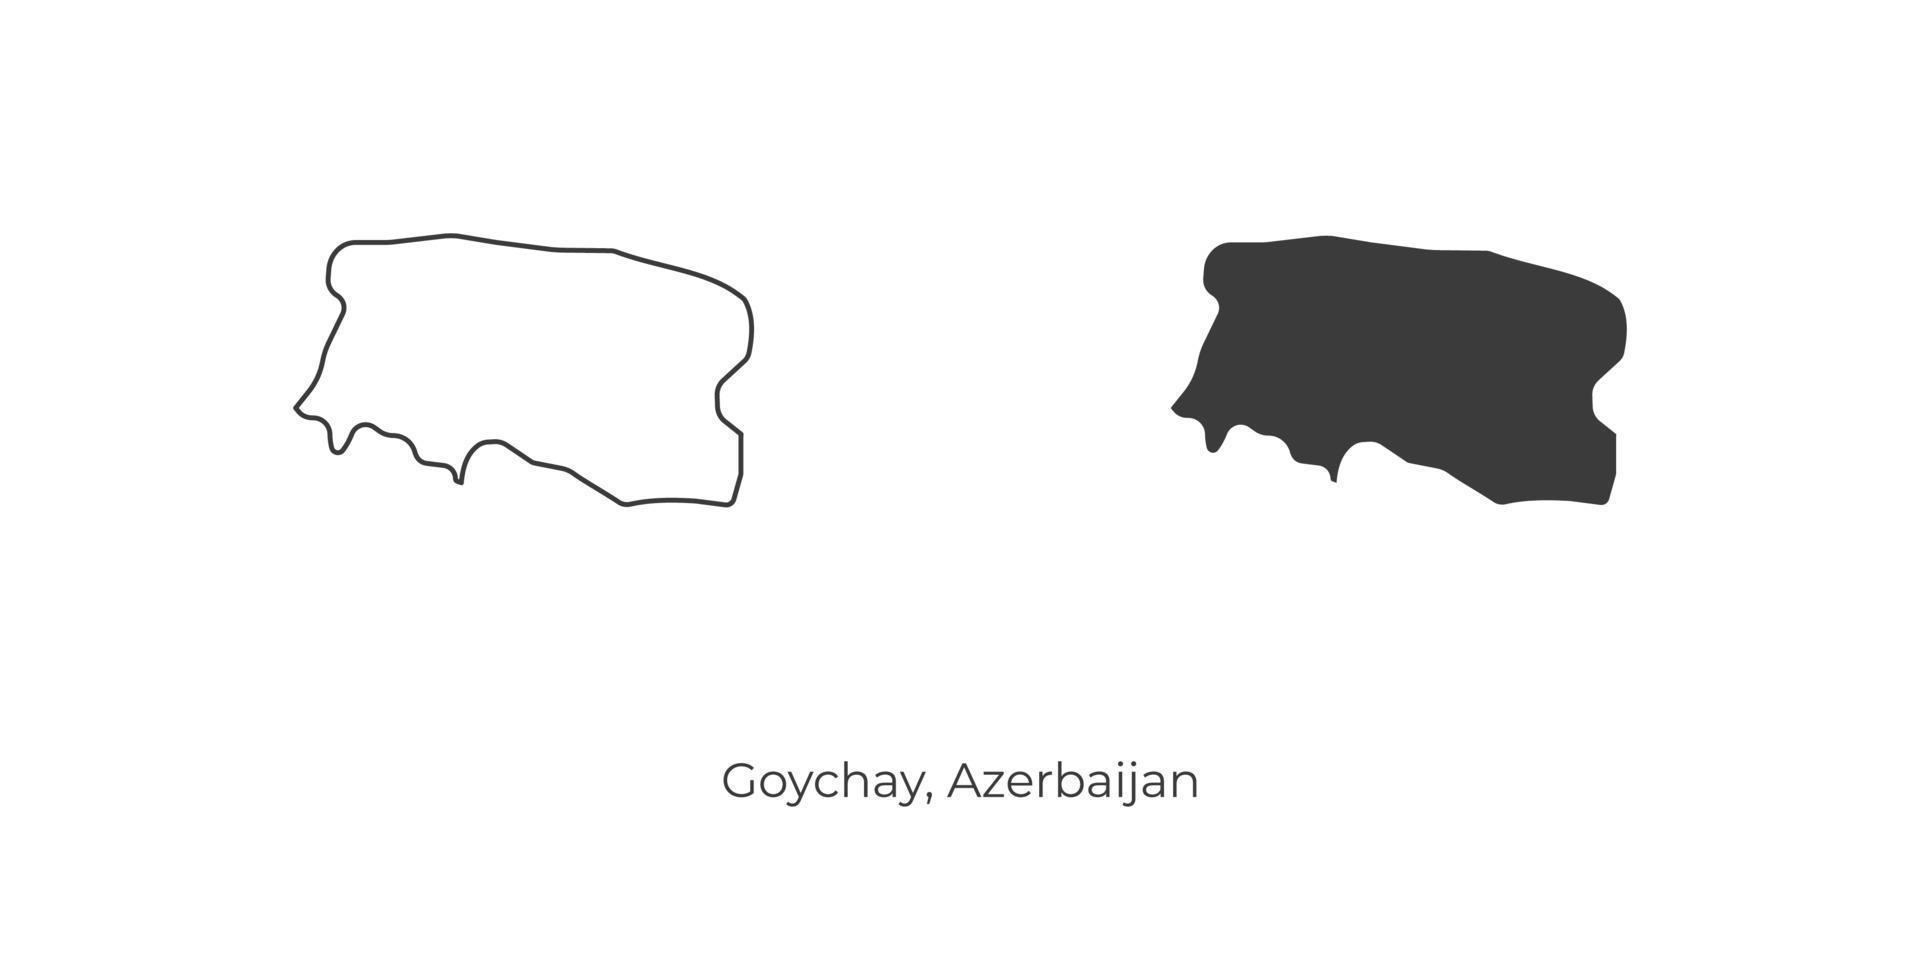 enkel vektorillustration av goychay-kartan, Azerbajdzjan. vektor